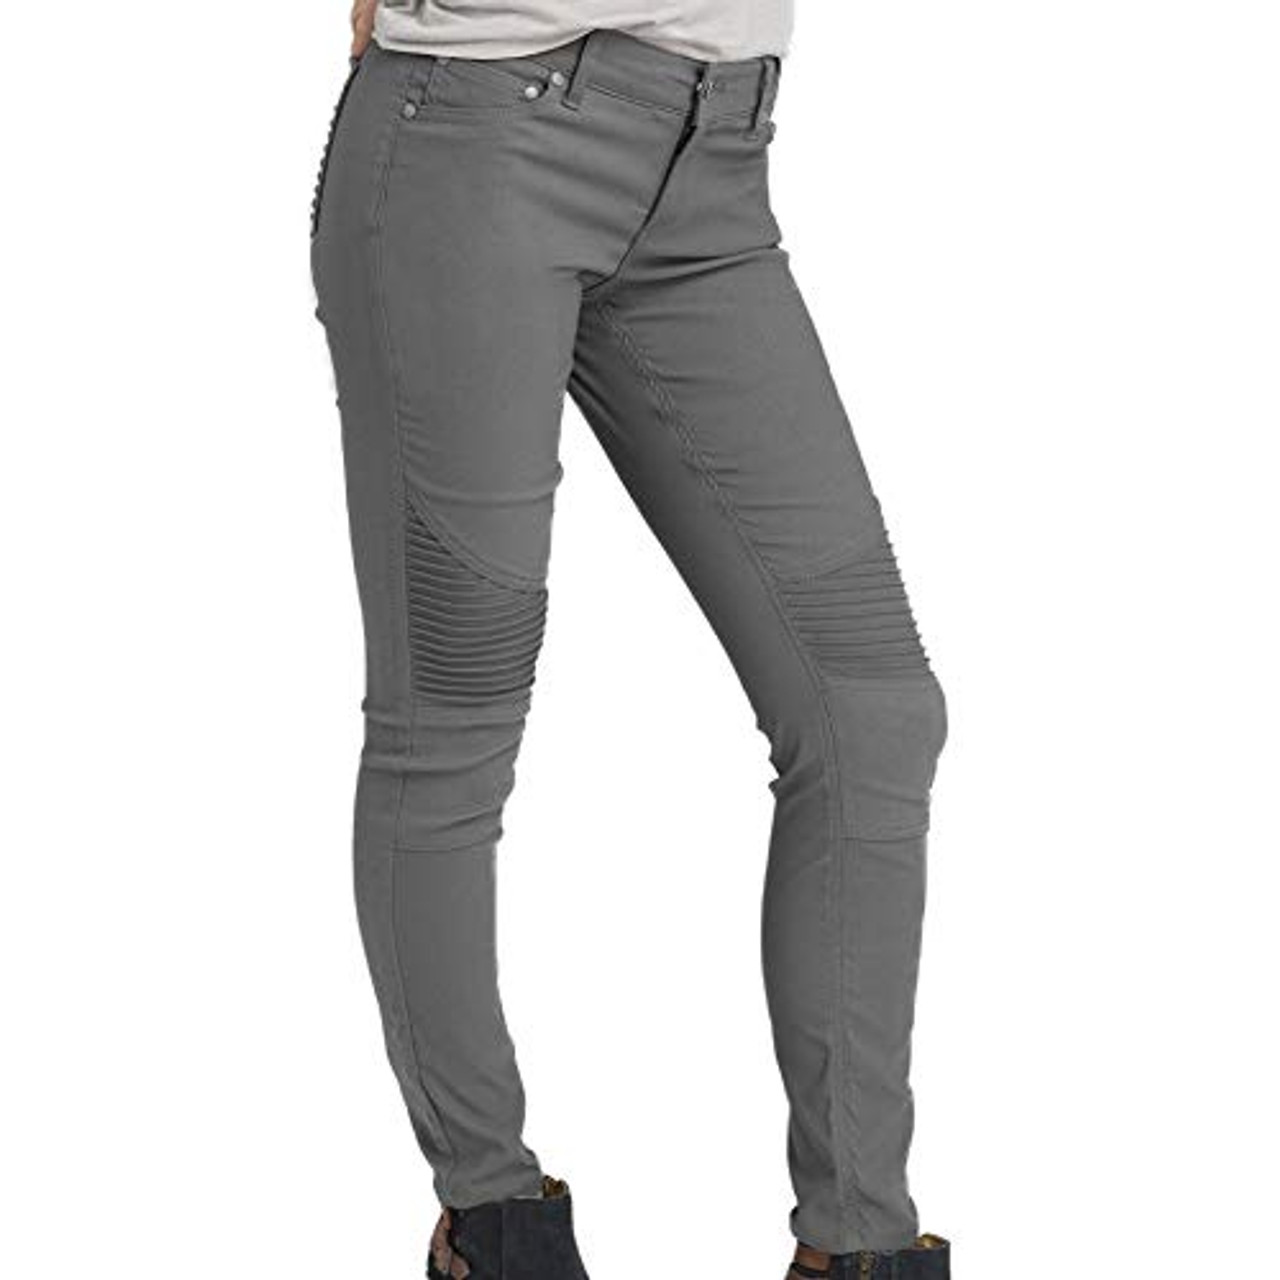 prAna Women's Standard Brenna Pant-Regular Inseam, Gravel, Size 0 -  Discount Scrubs and Fashion